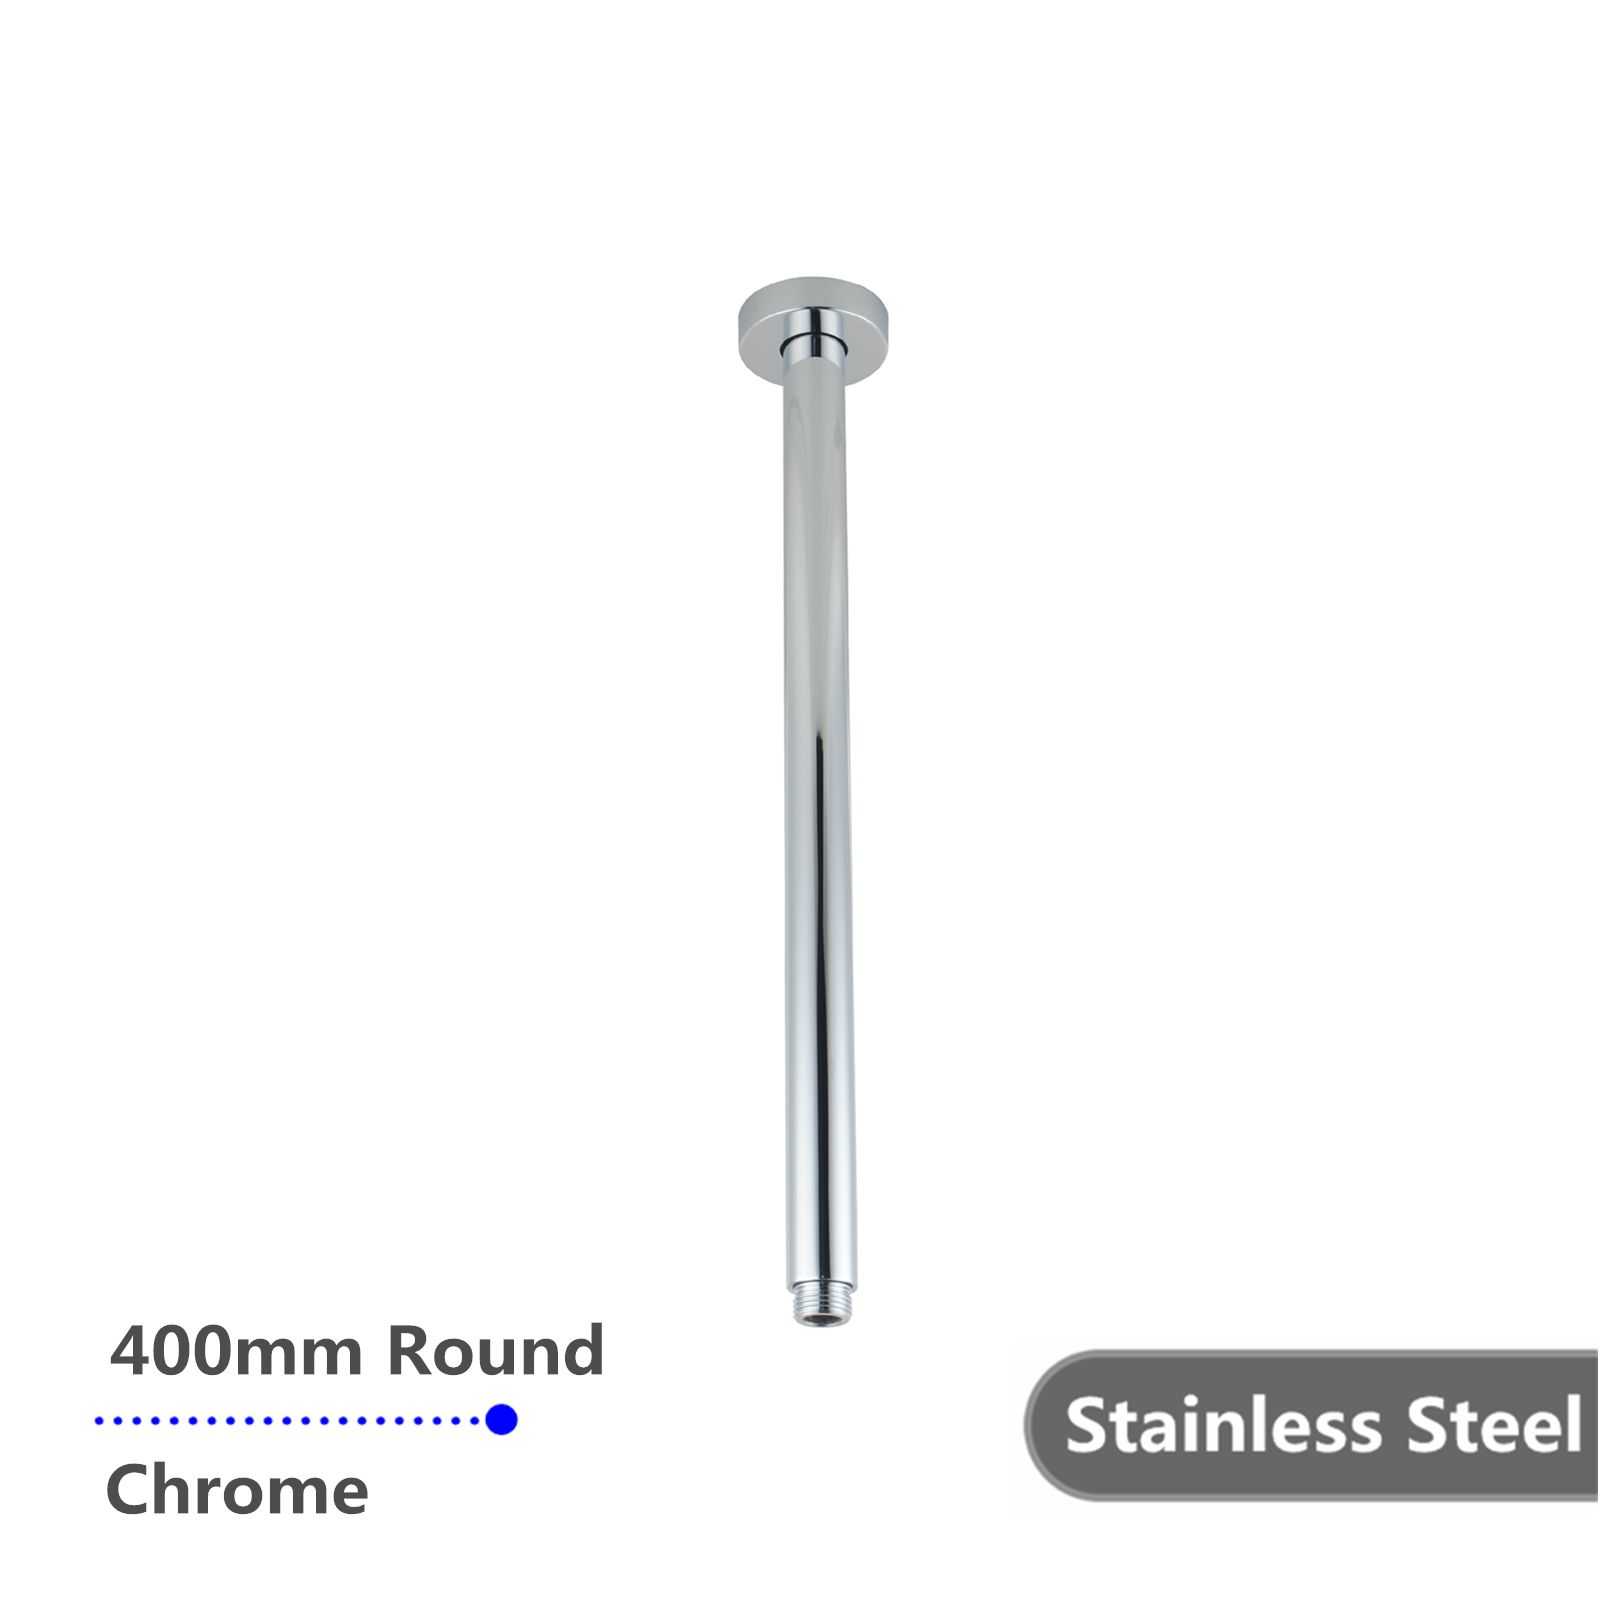 Round Chrome Ceiling Shower Arm 400mm